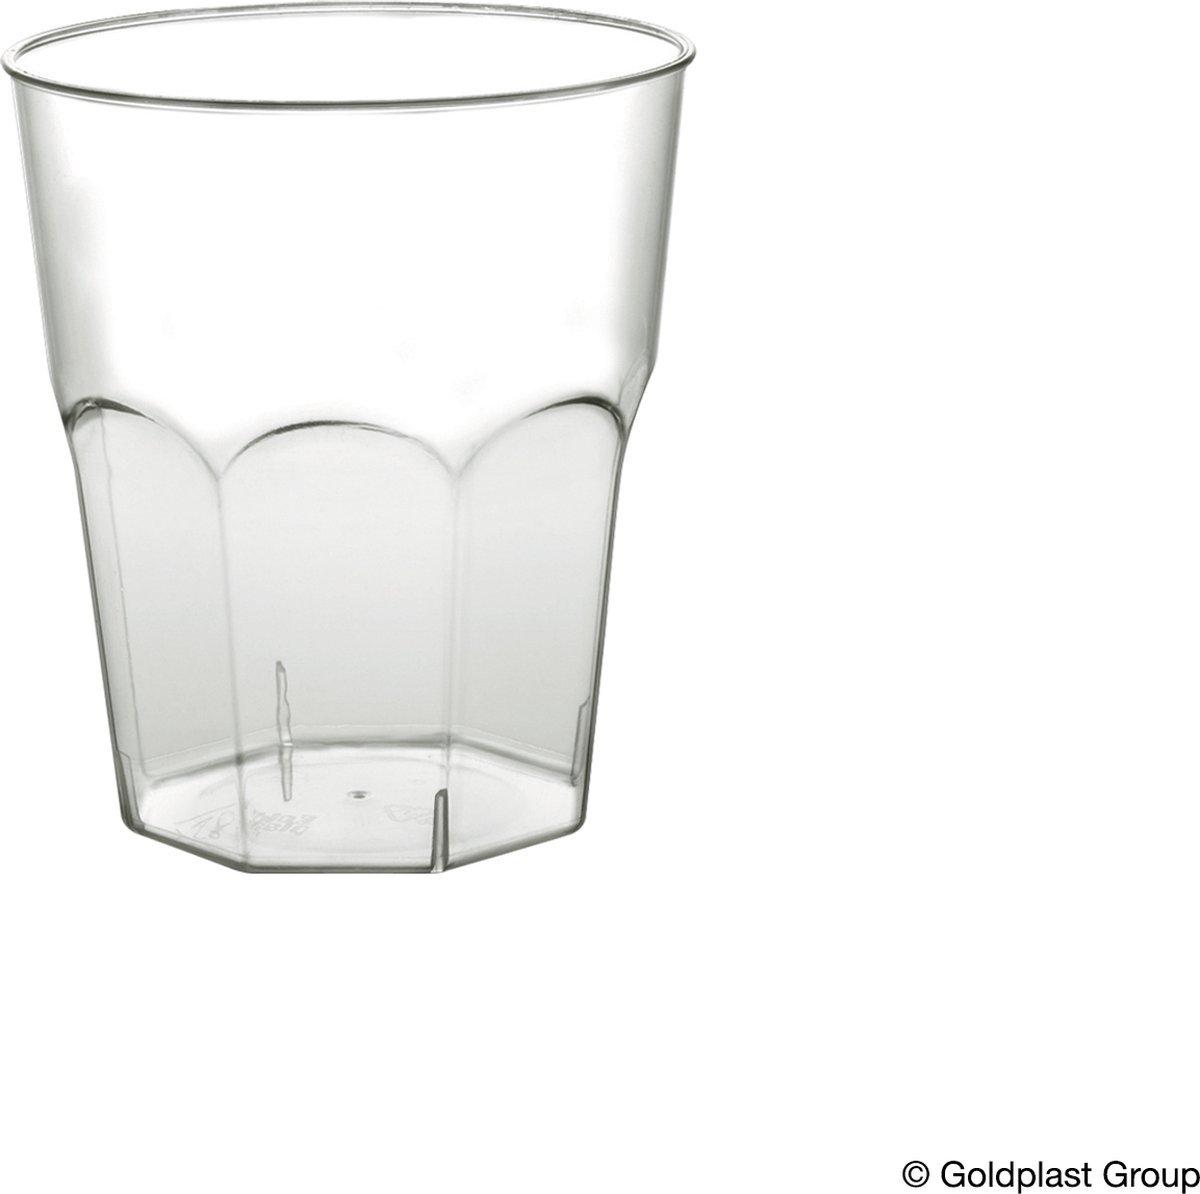 Wijnglas/ brasserieglas, reusable, pS, 160ml, transparant 50 stuks